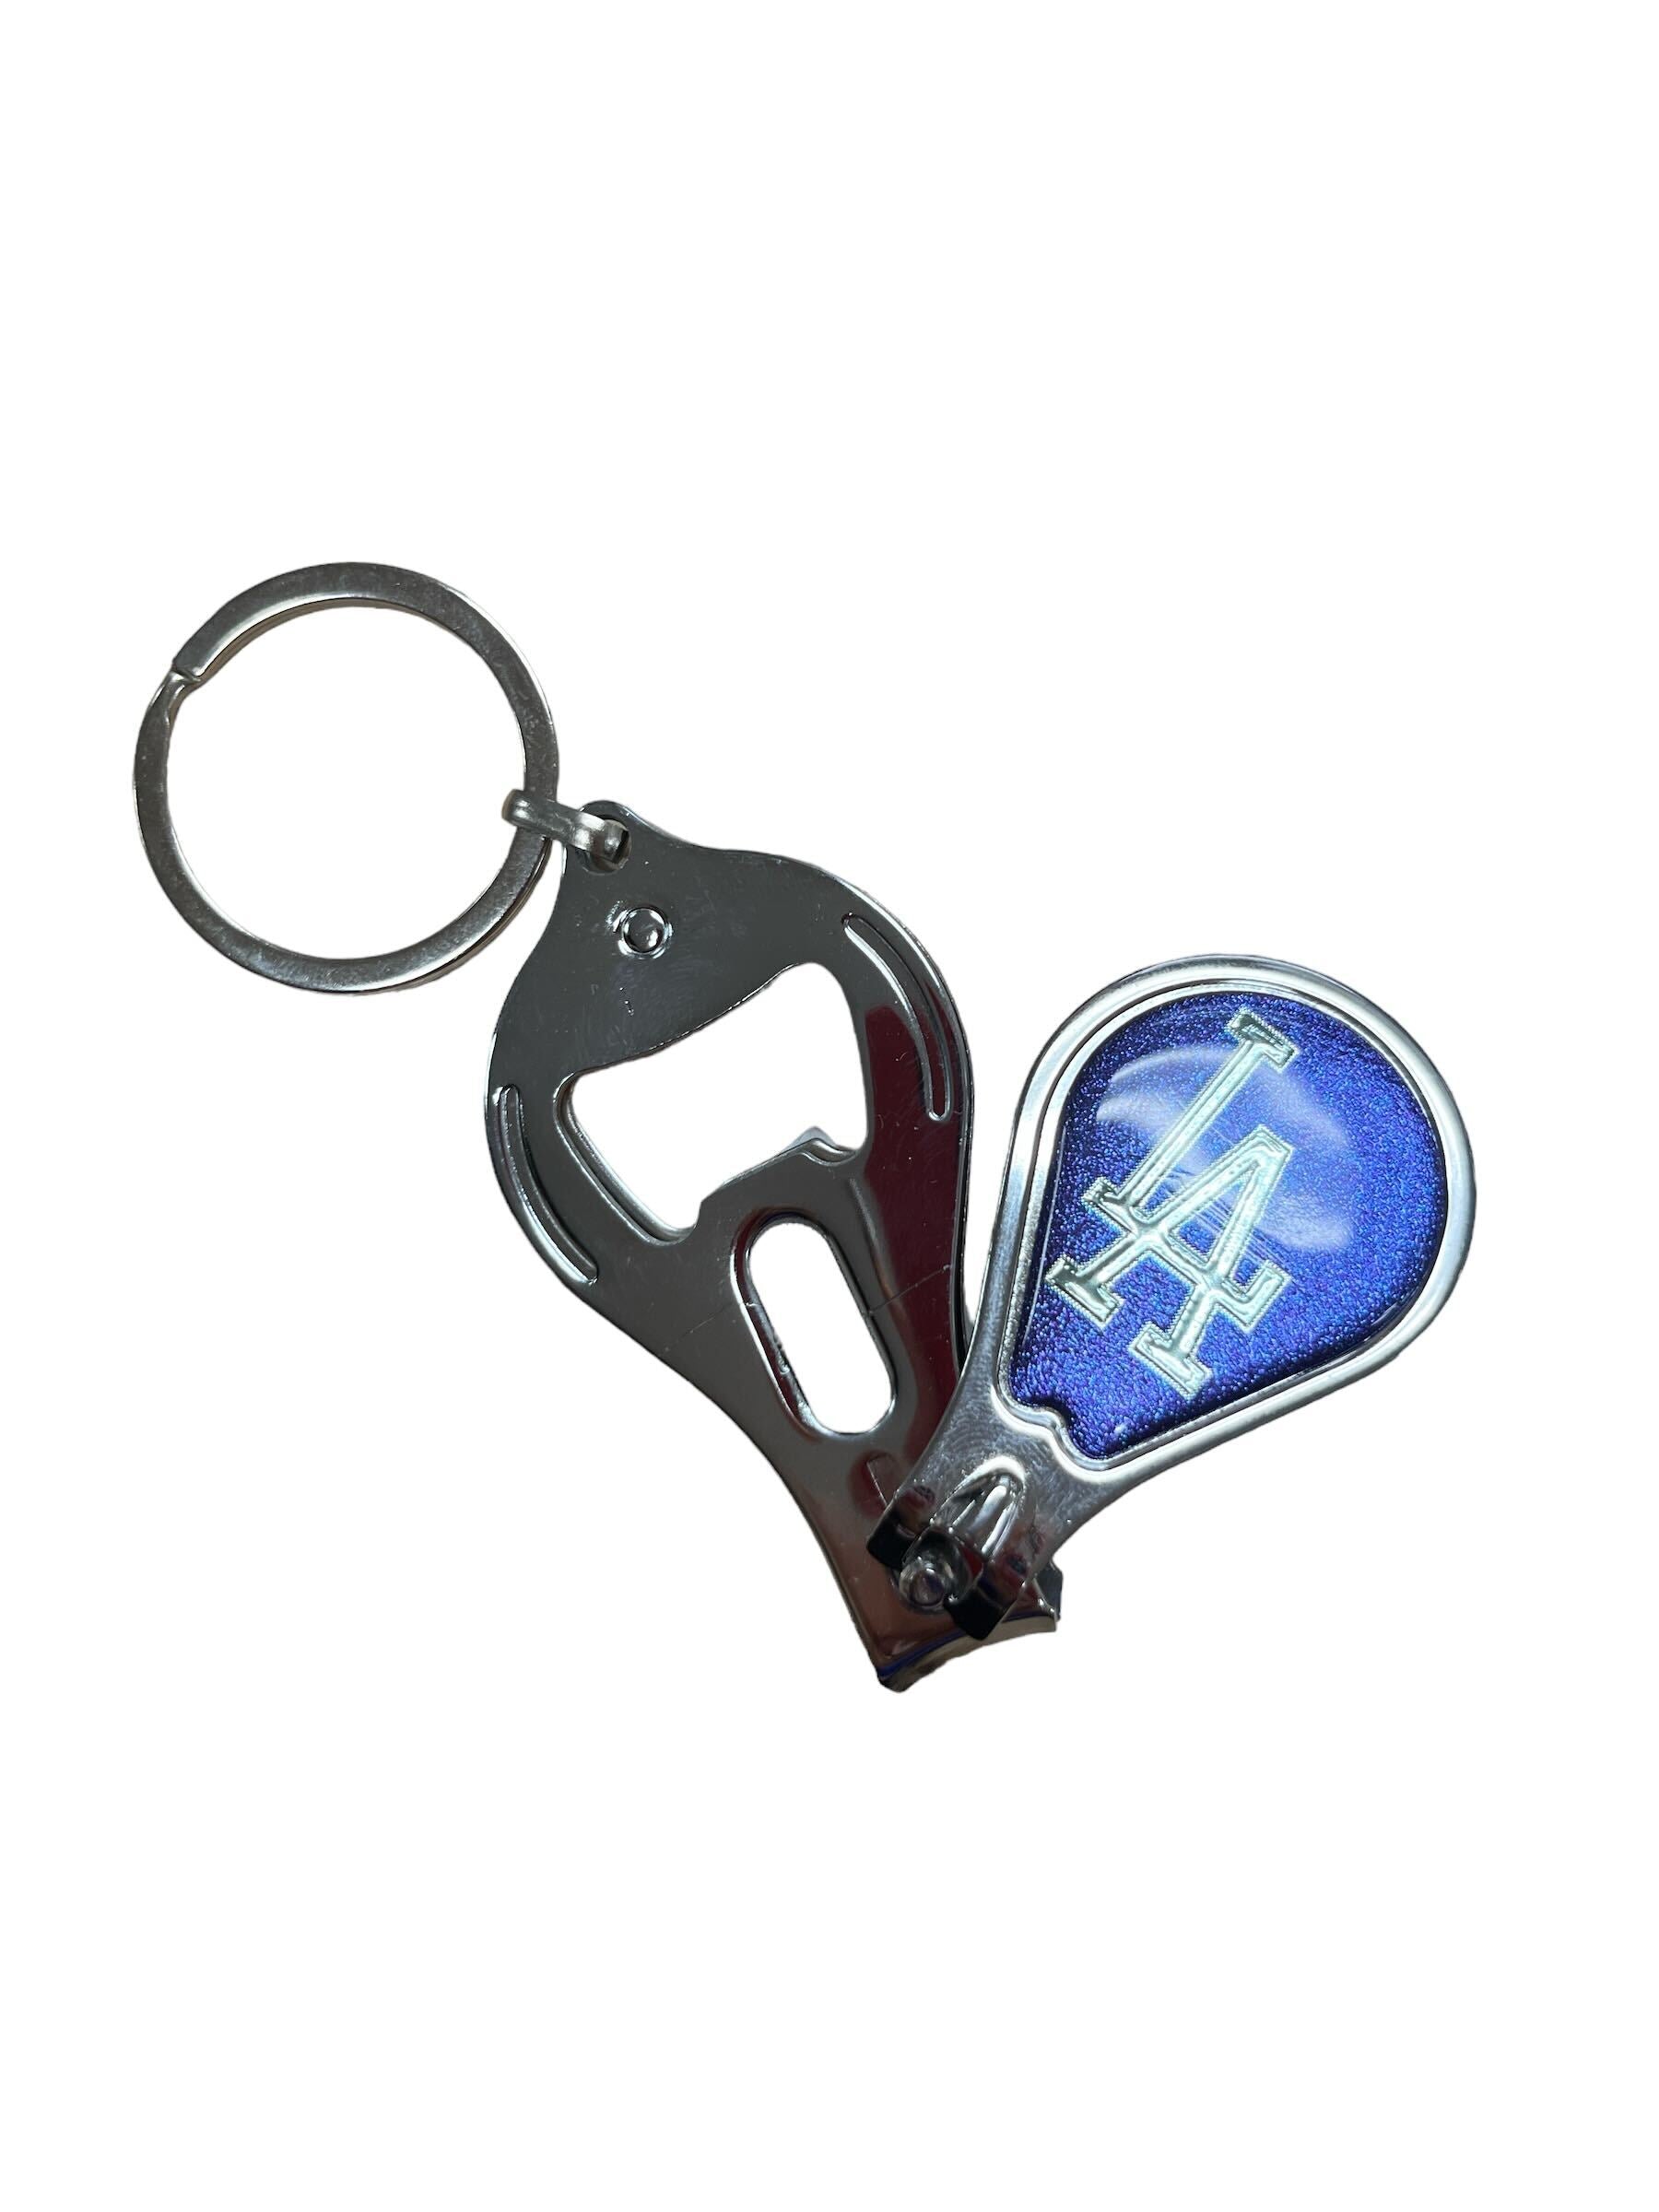 Ultra Thin Mini Travel Nail Clipper Cutter Foldable Trimmer Keychain Gadget  Tool | eBay